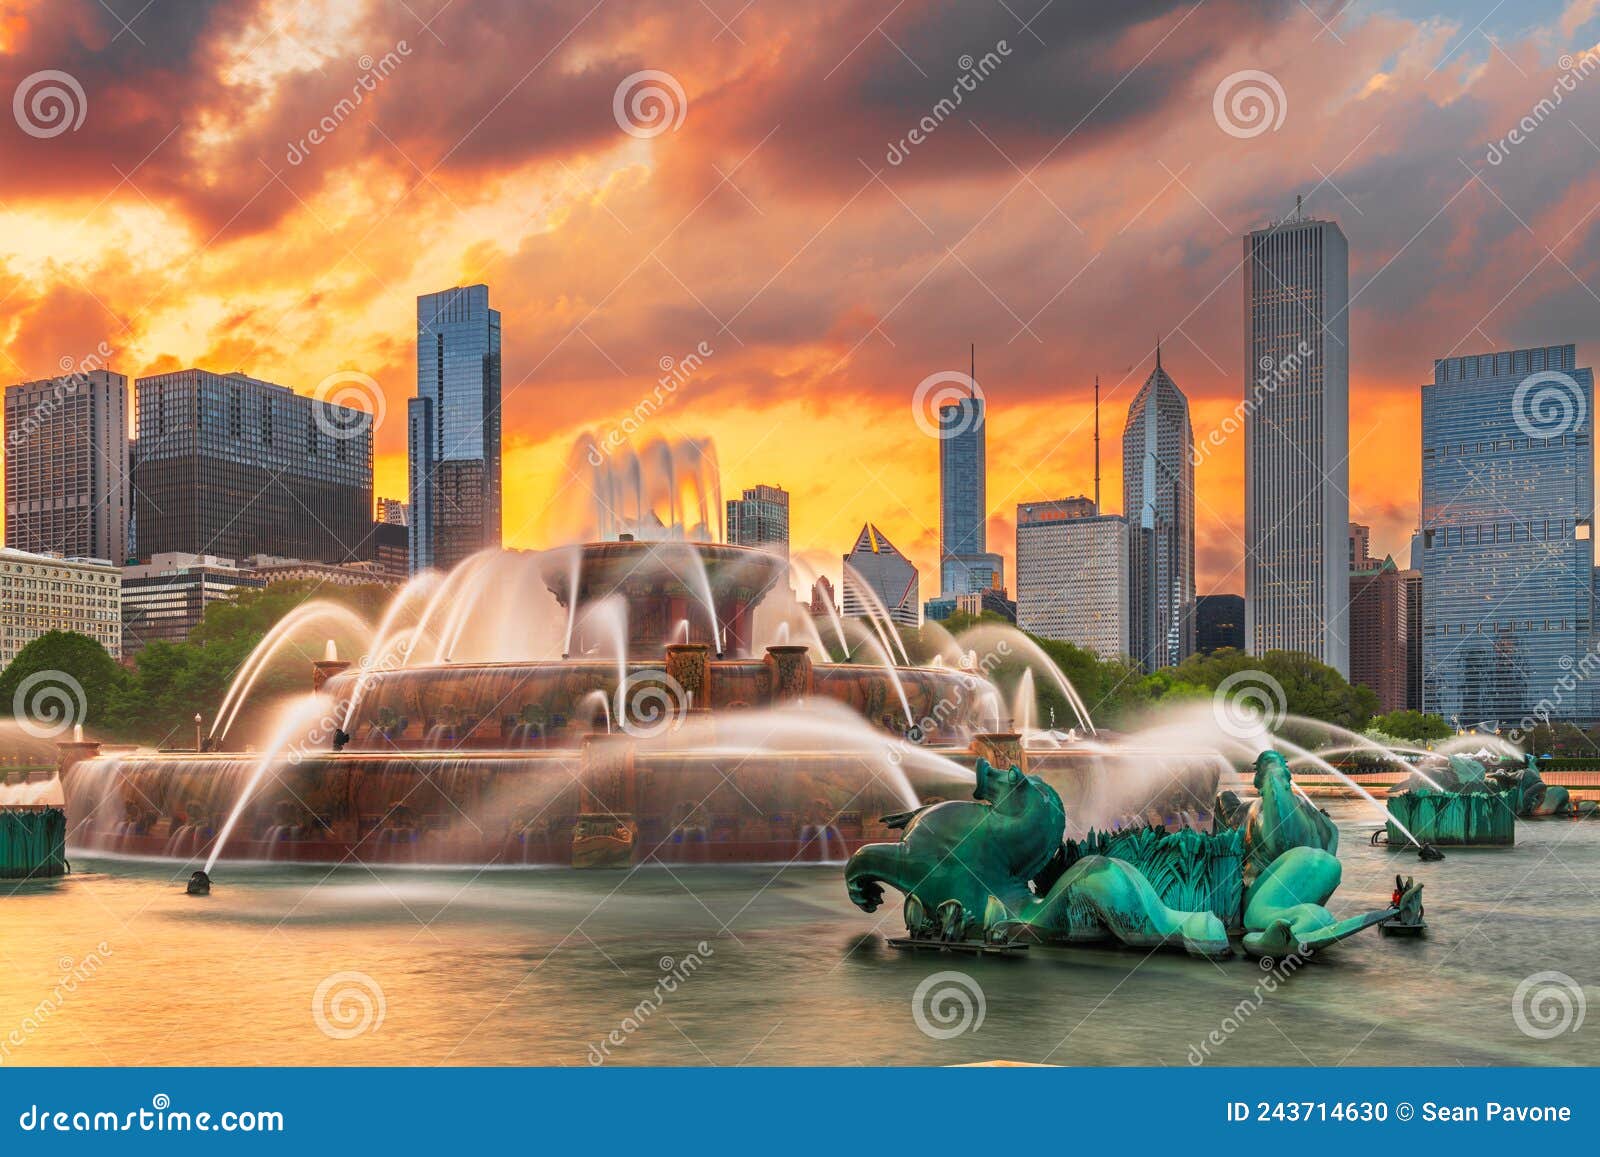 chicago, illinois, usa skyline and fountain